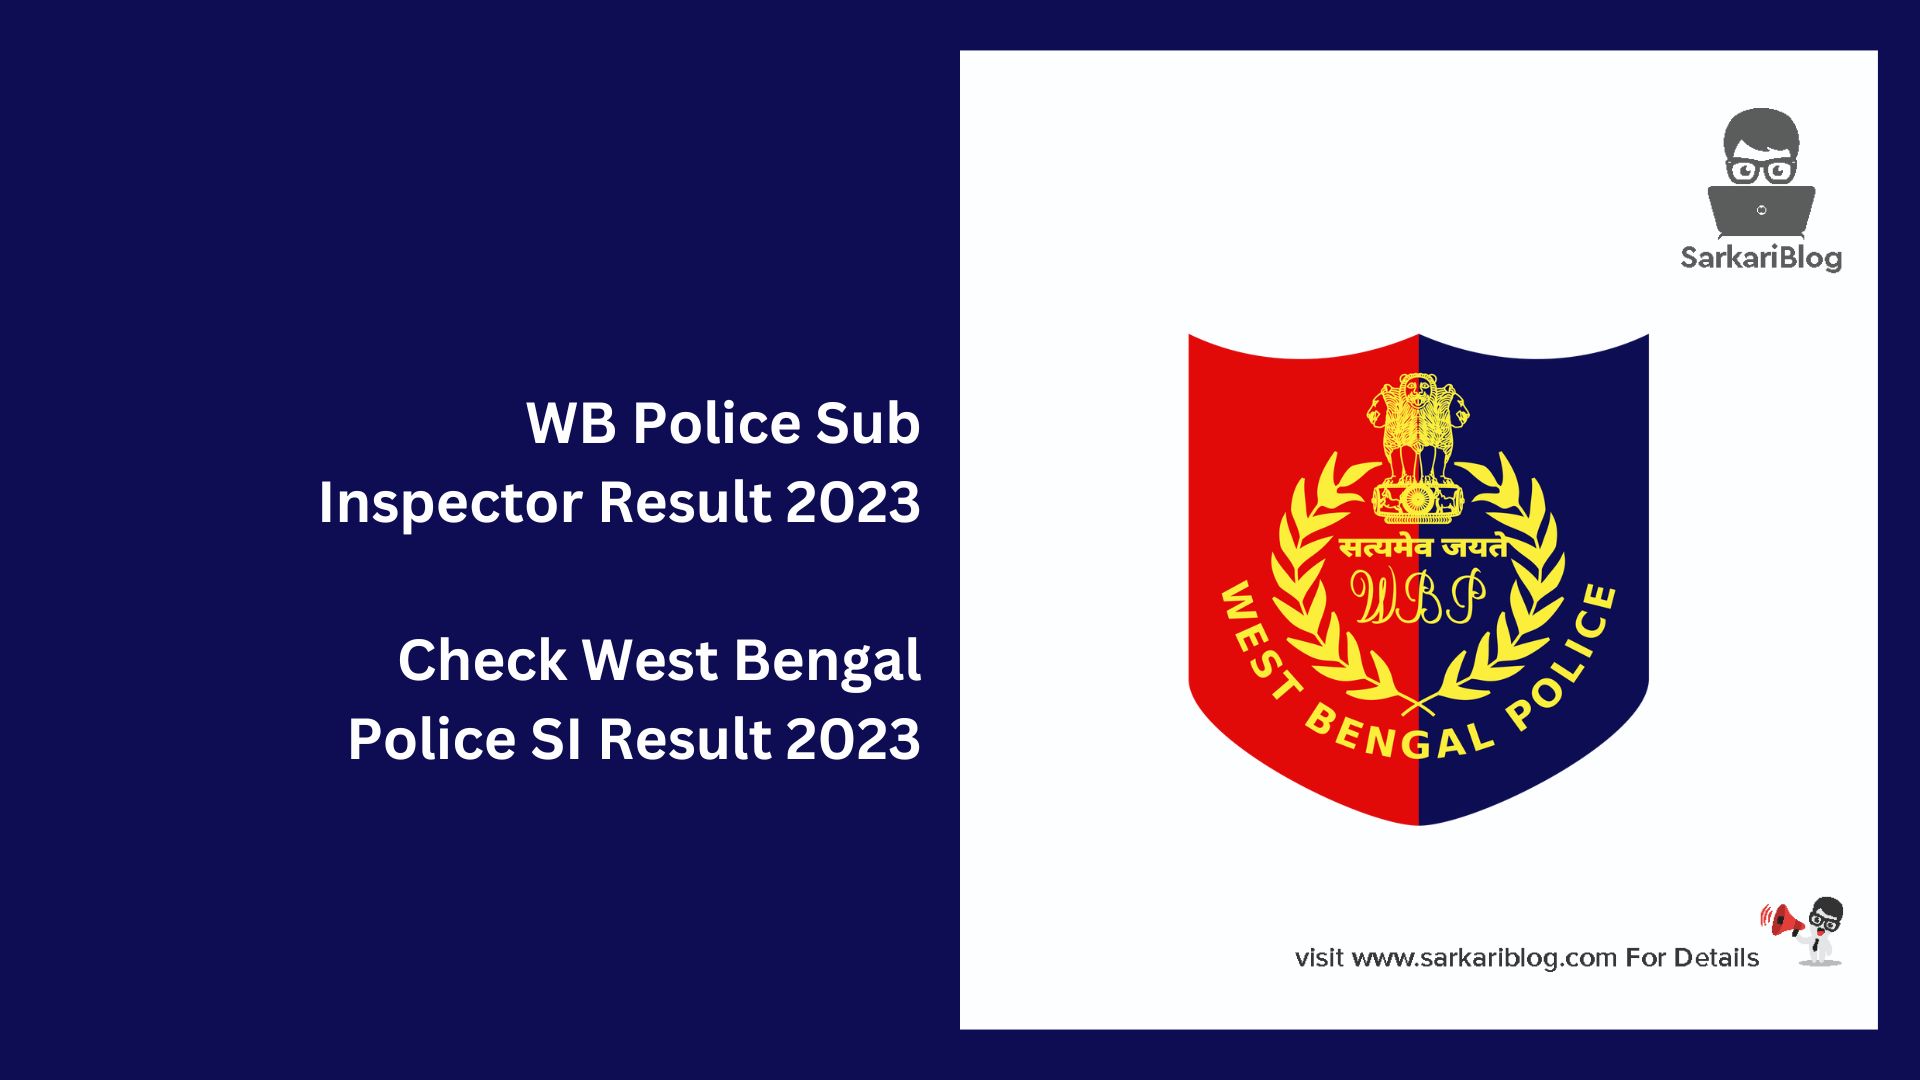 WB Police Sub Inspector Result 2023